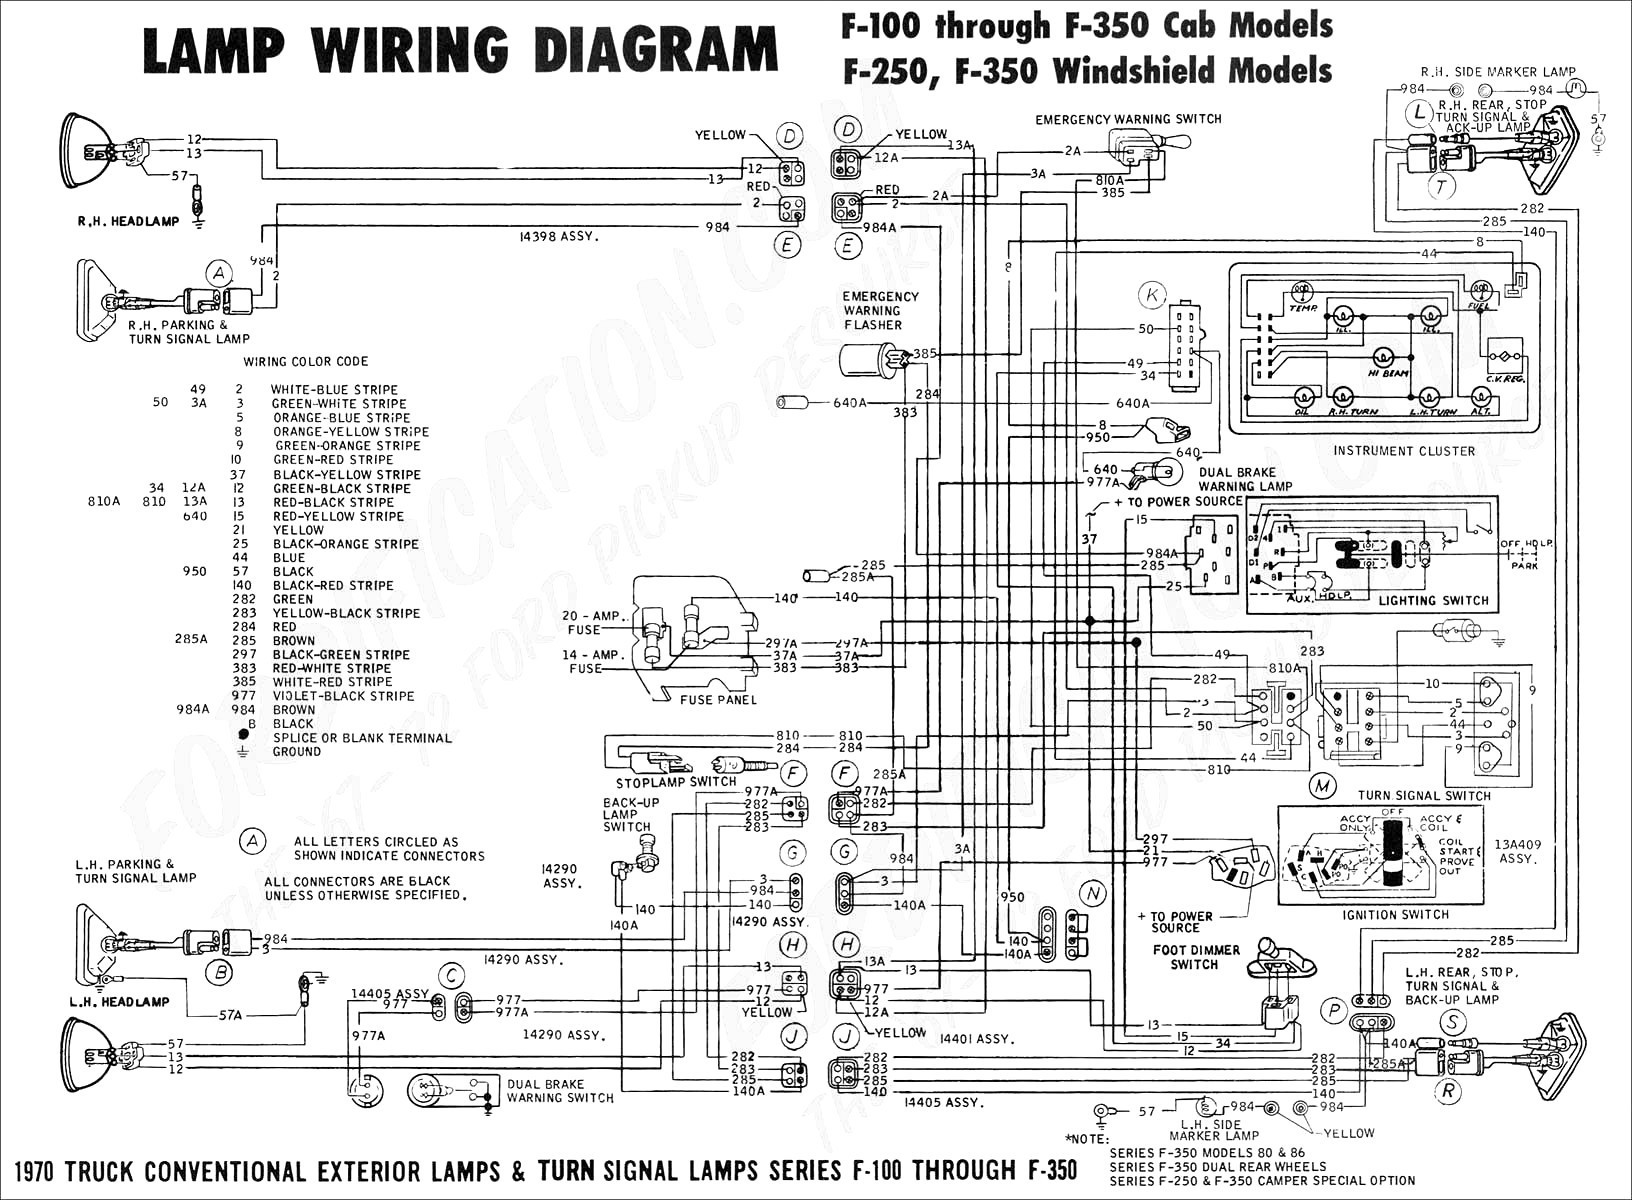 2001 ford mustang spark plug wiring diagram valid 2001 ford mustang ford taurus spark plug wiring